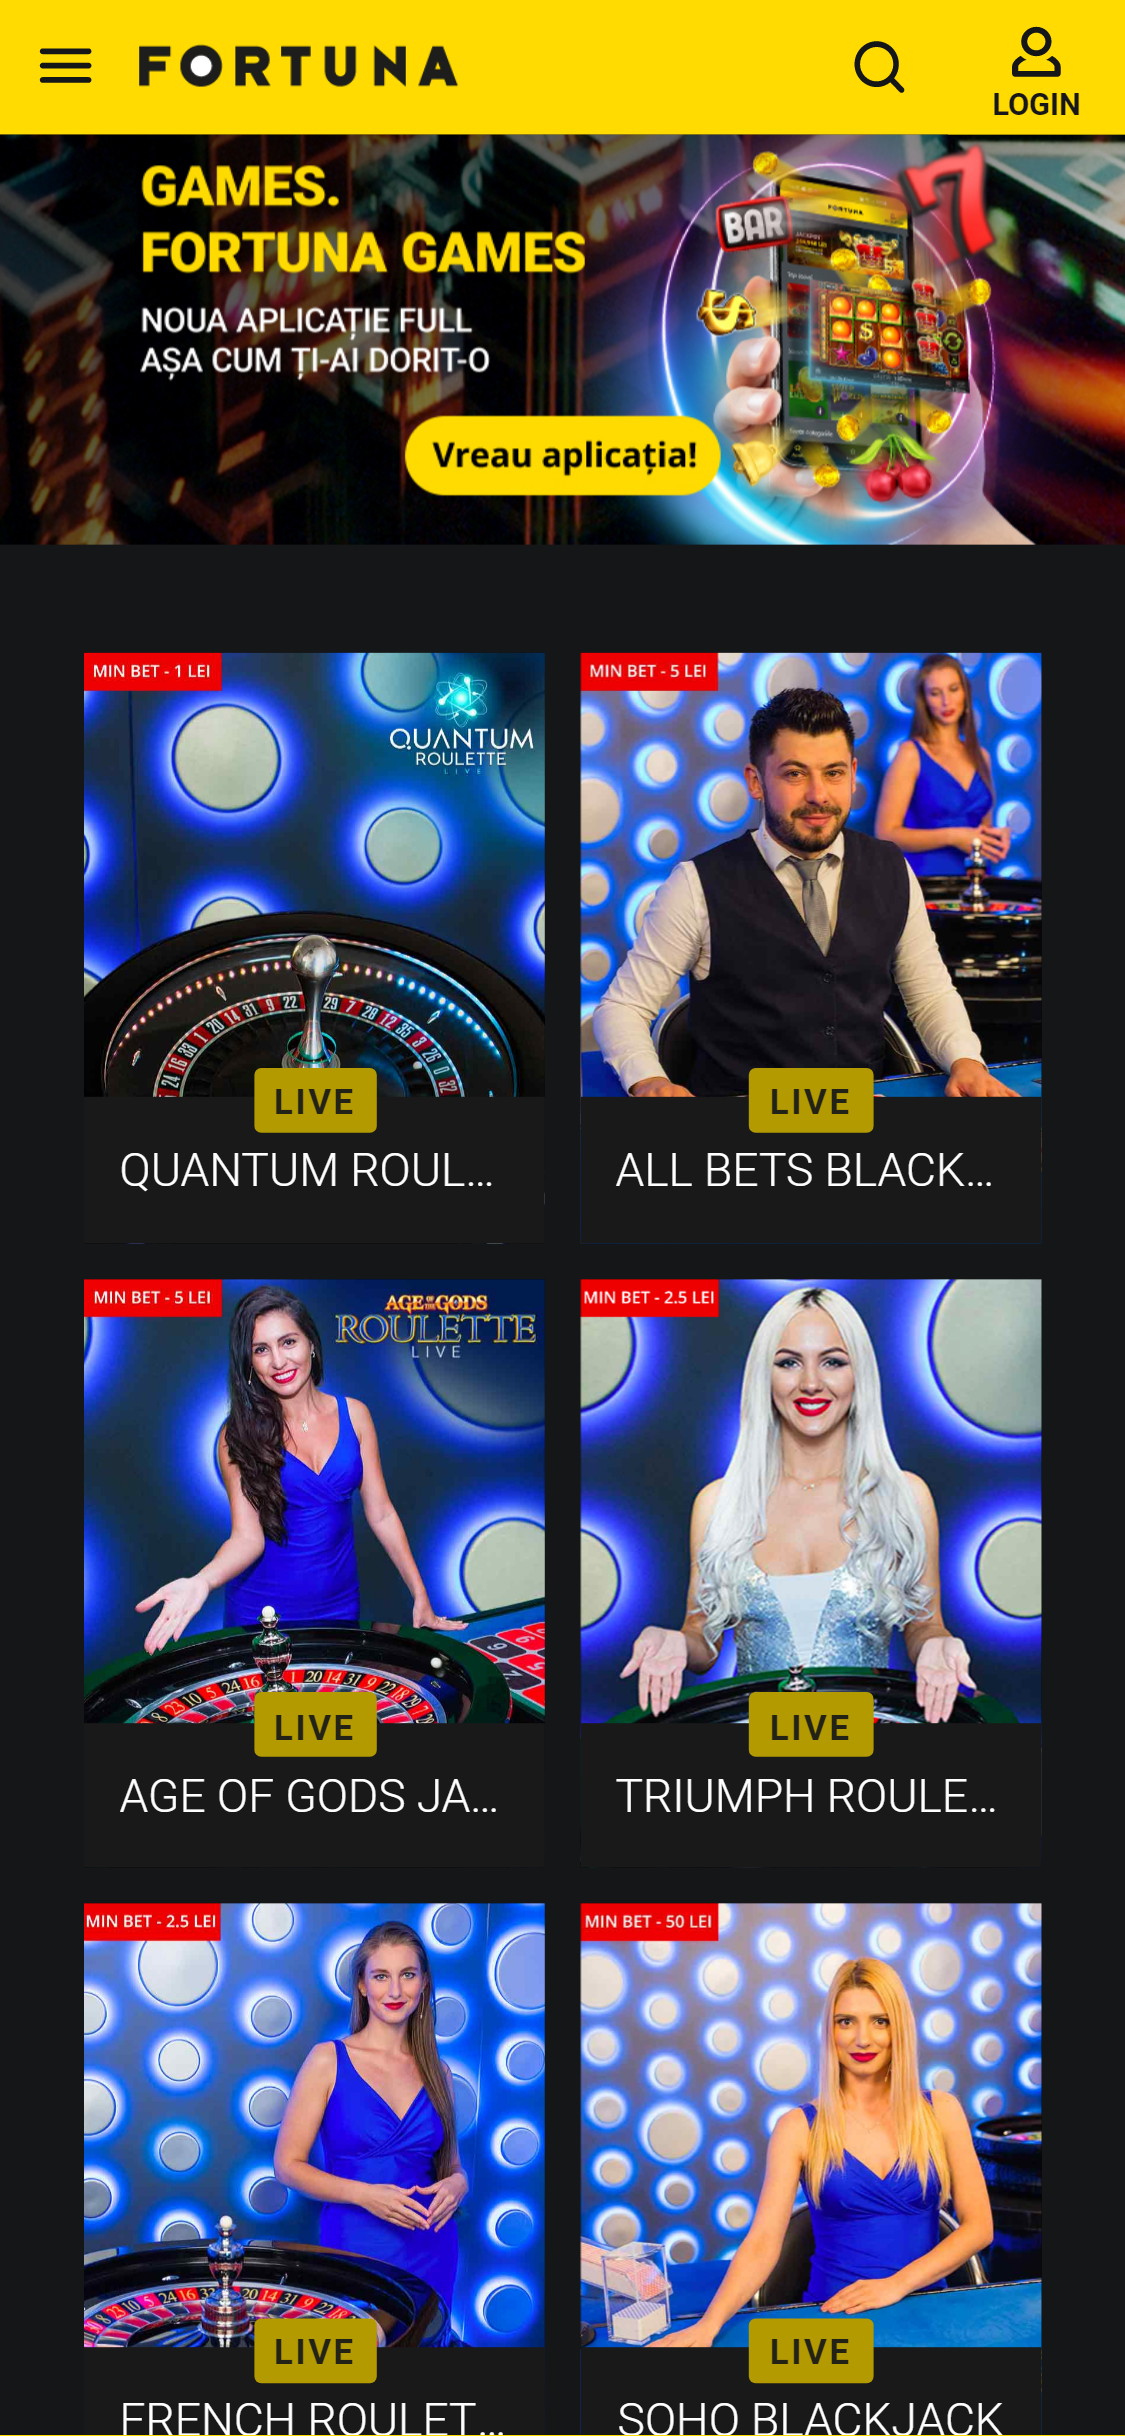 eFortuna Casino Mobile Live Dealer Games Review